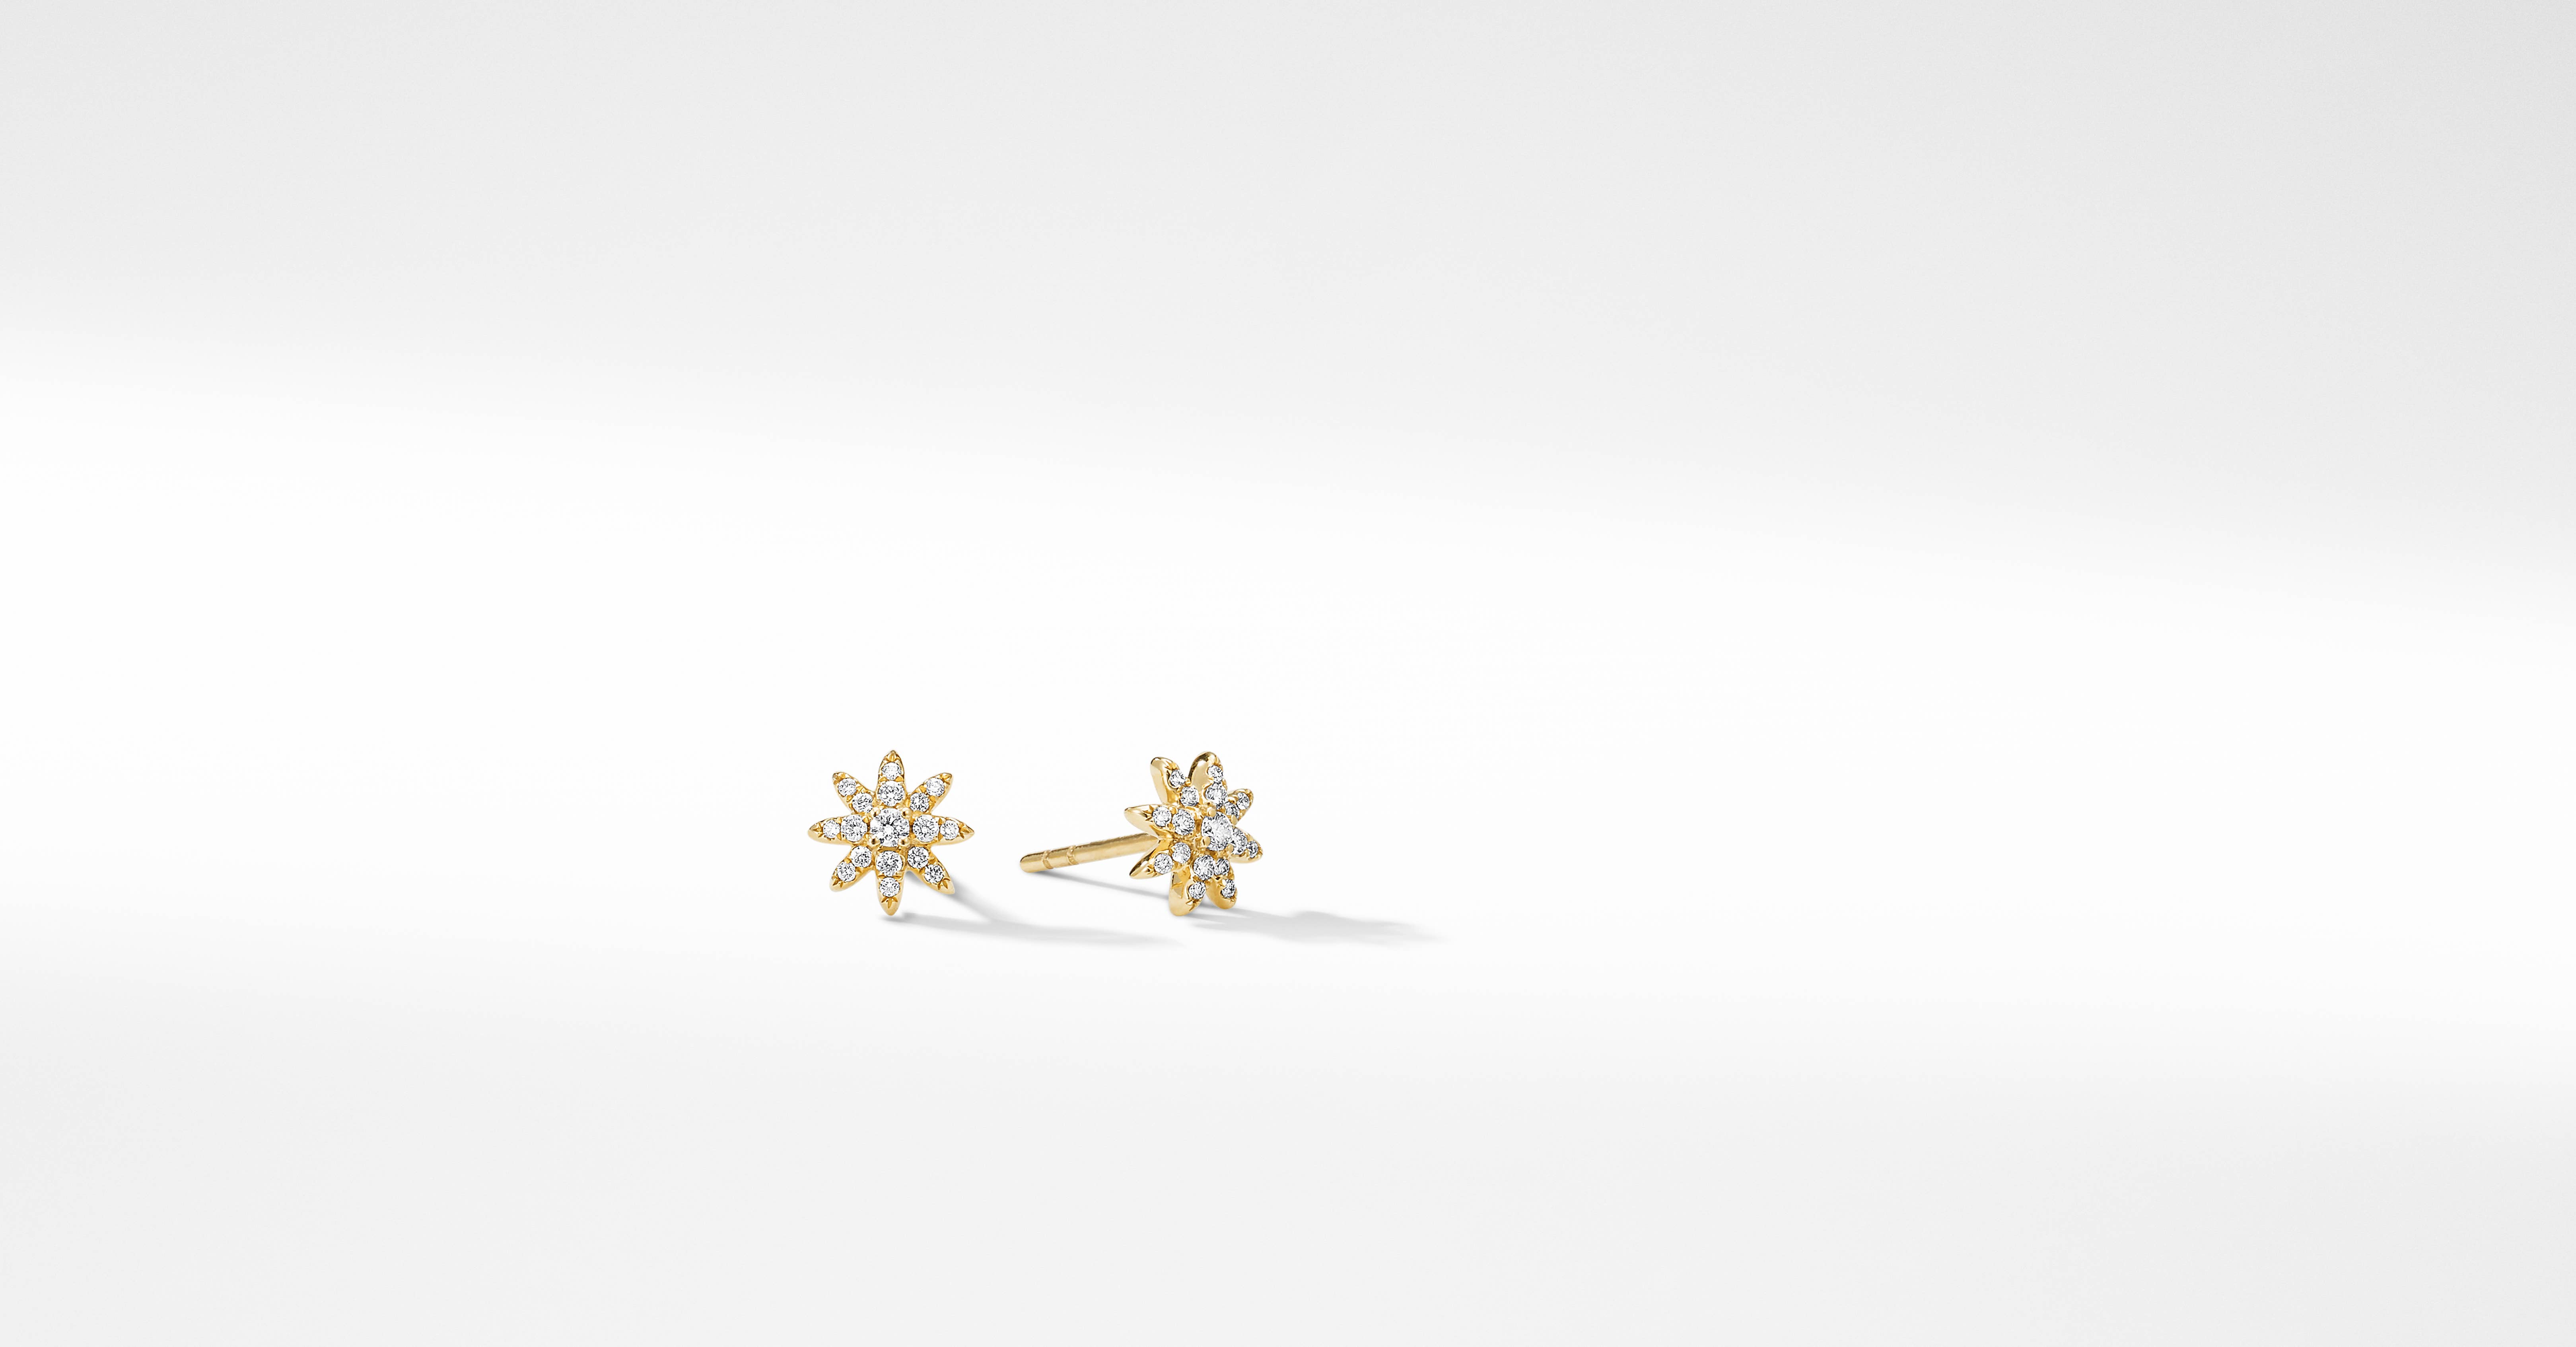 David Yurman | Petite Starburst Stud Earrings in 18K Yellow Gold with Full Pavé Diamonds